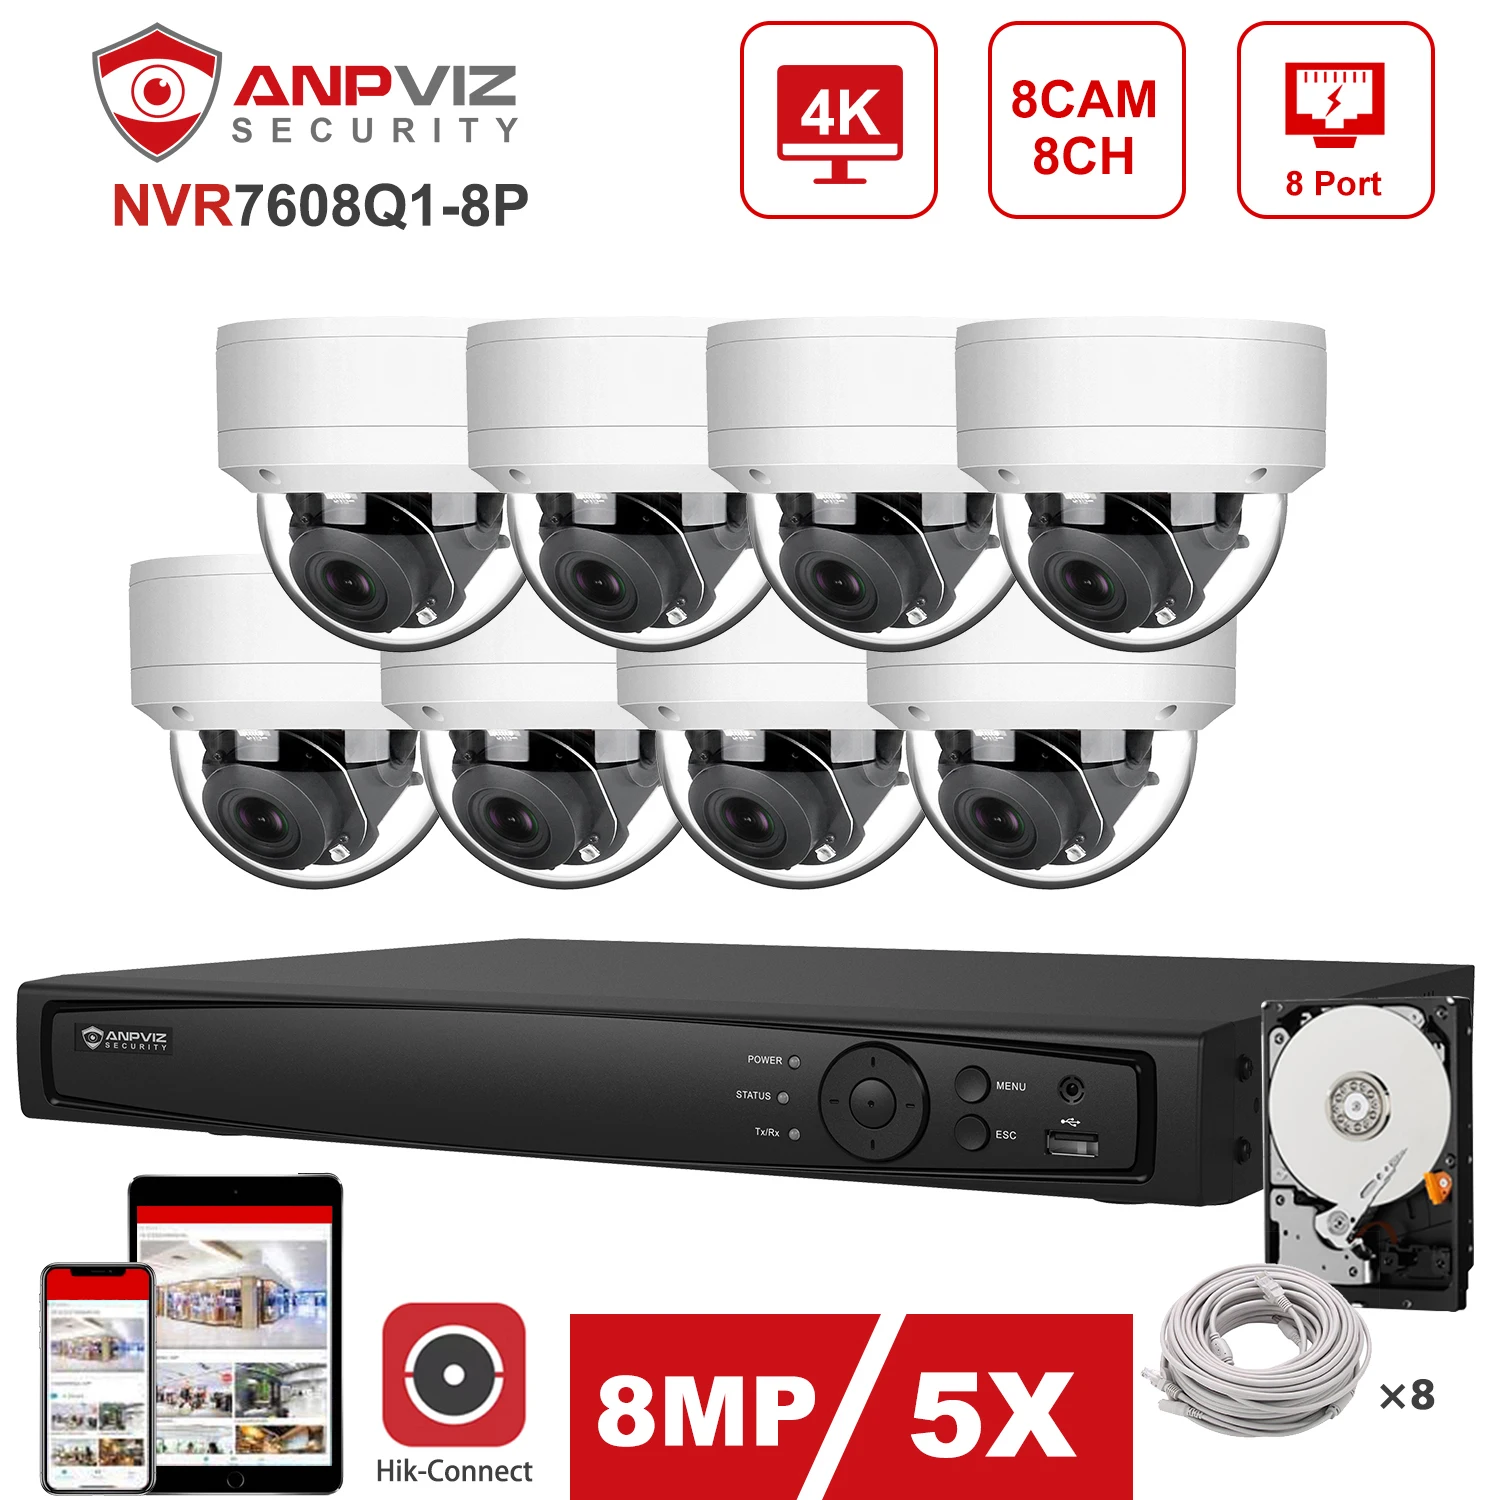 Hikvision-Kit de sistema de seguridad para exteriores, cámara IP de 8MP, 8 canales, 4K, NVR, Anpviz, IP, PTZ, Zoom 5X, POE, IP, Audio, CCTV, P2P, vista H.265